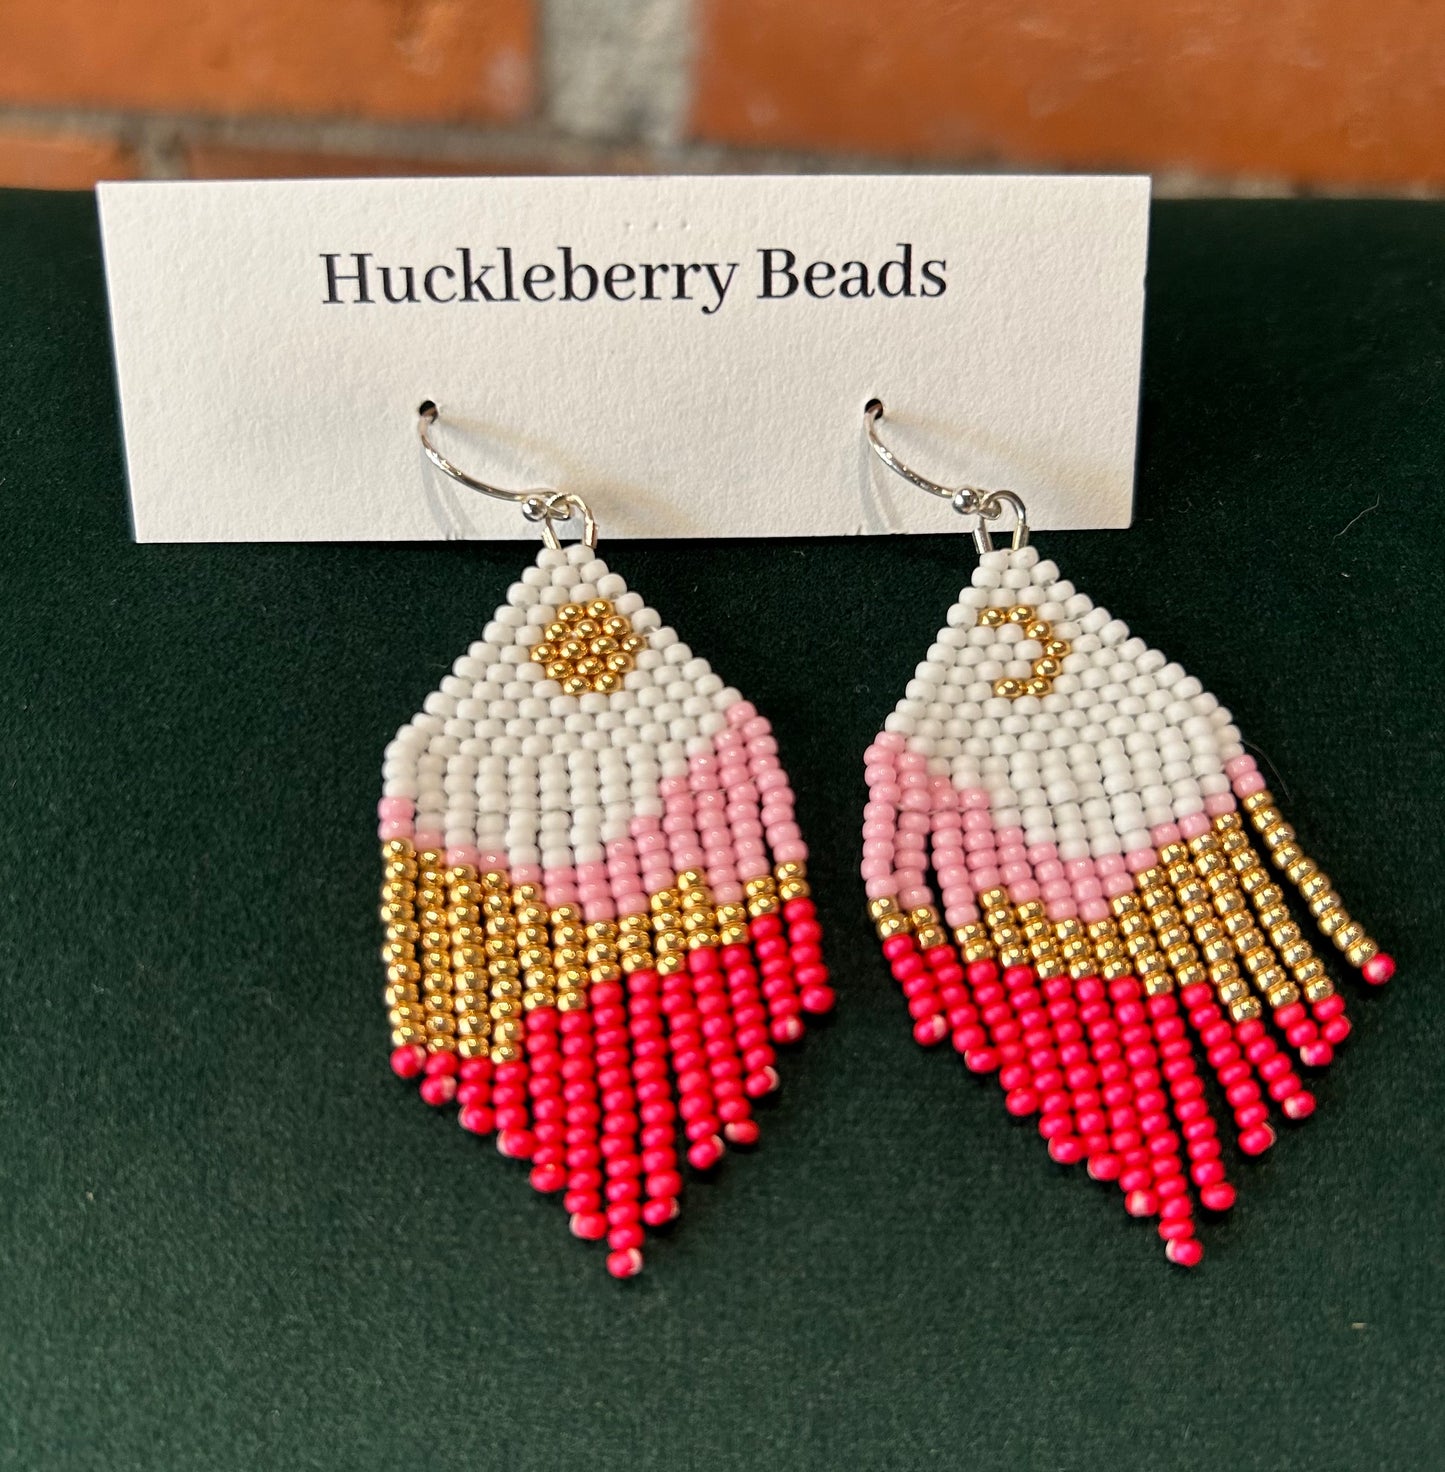 Huckleberry Beads- Rolling Hills Earrings